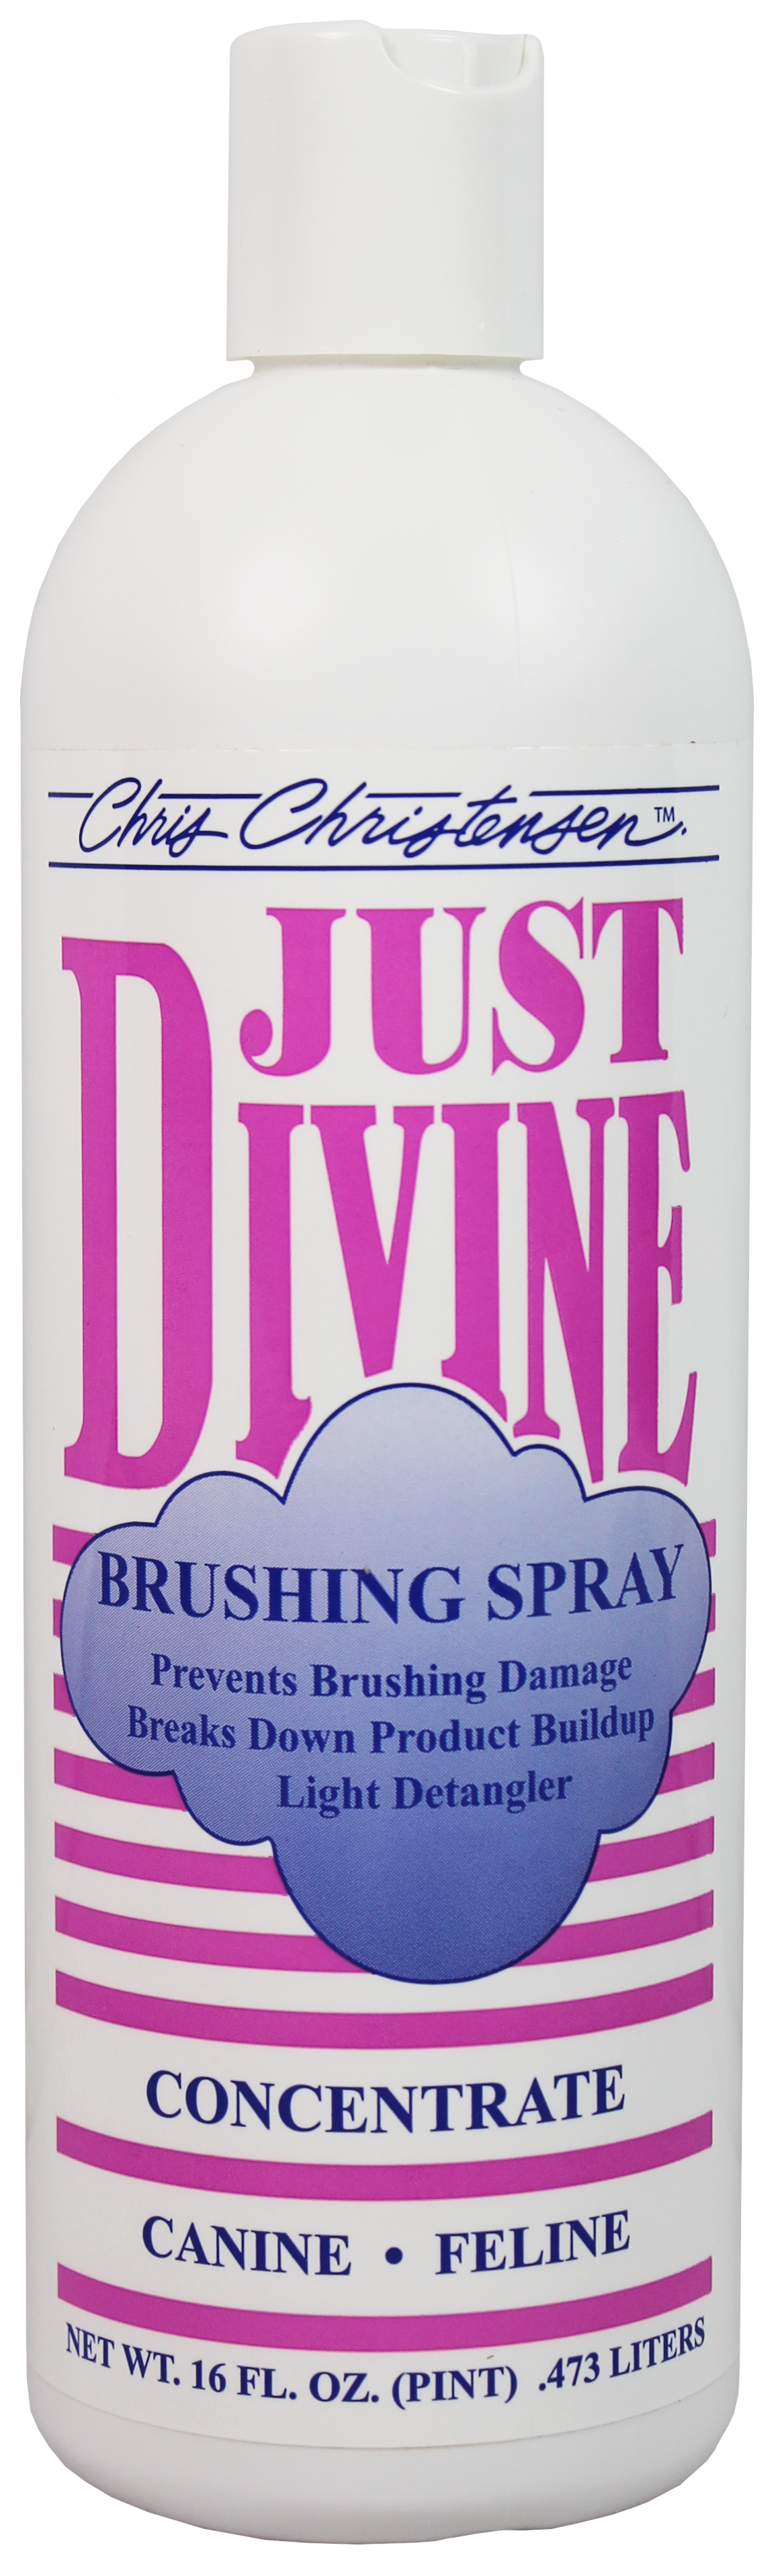 Just Divine Brushing Spray